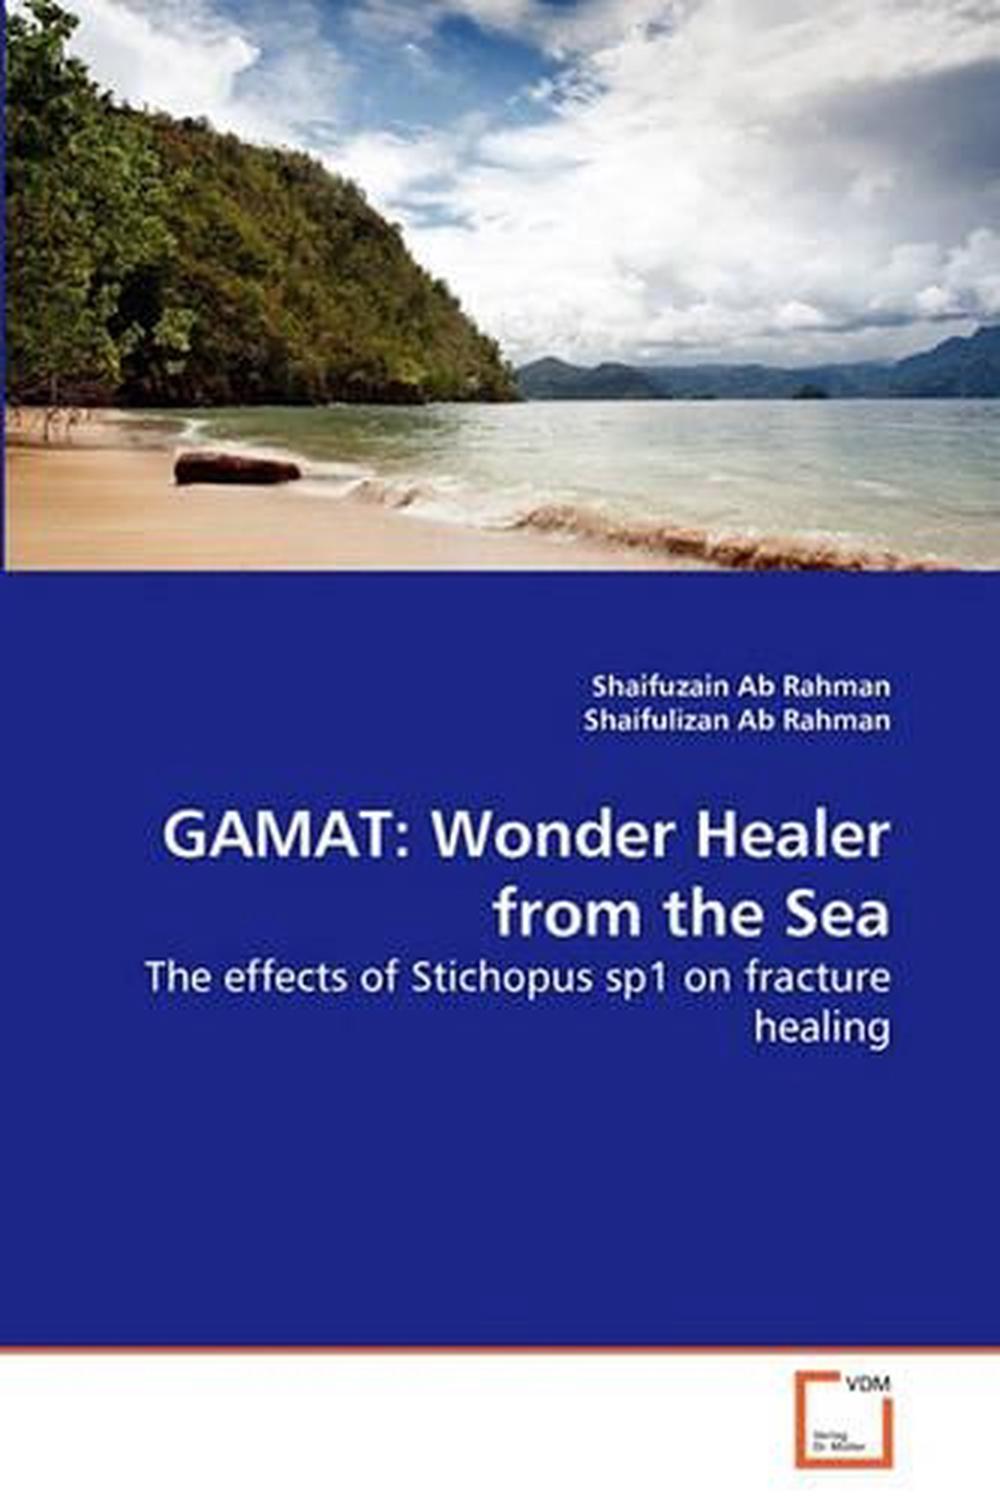 Gamat: The effects of Stichopus sp1 on fracture healing by Shaifuzain Ab Rahman  - Photo 1 sur 1